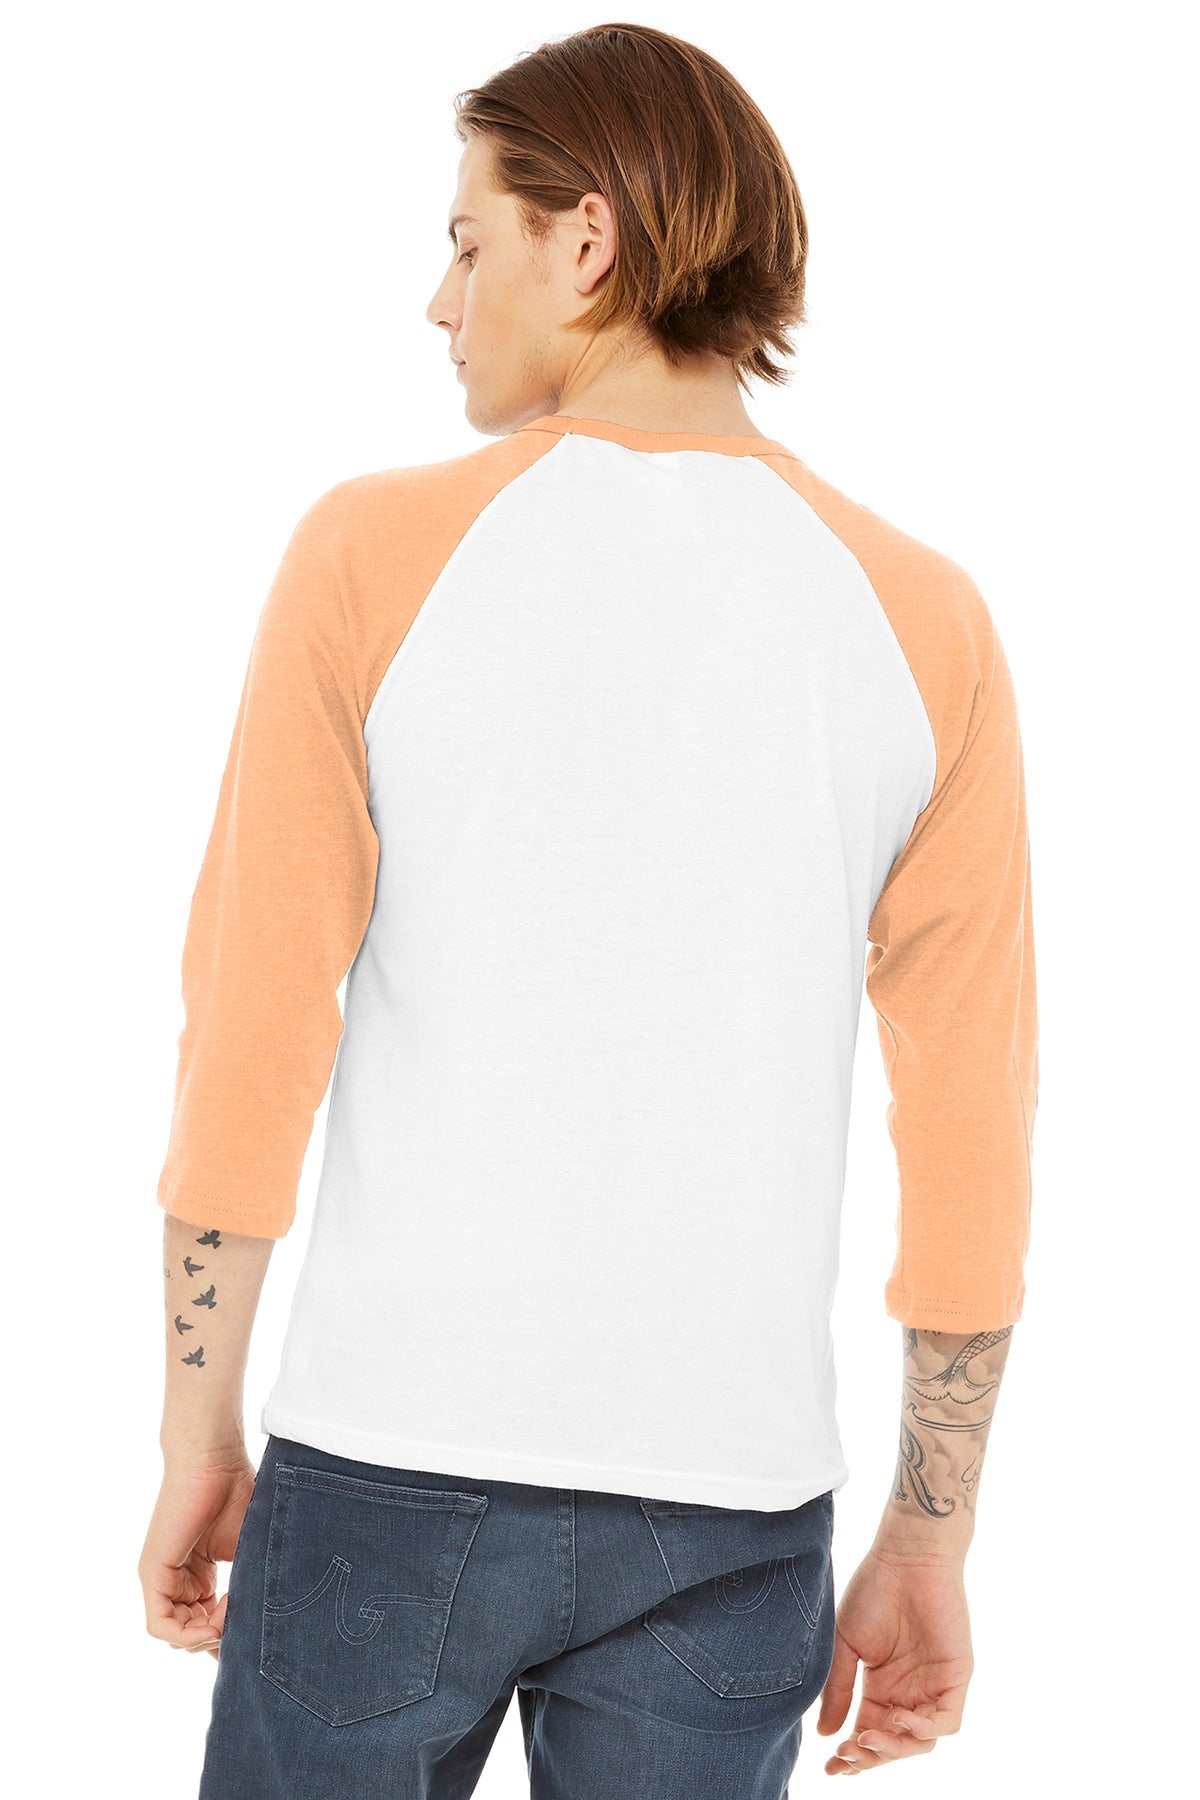 bella + canvas unisex 3/4-sleeve baseball t-shirt 3200 wht/ hthr peach